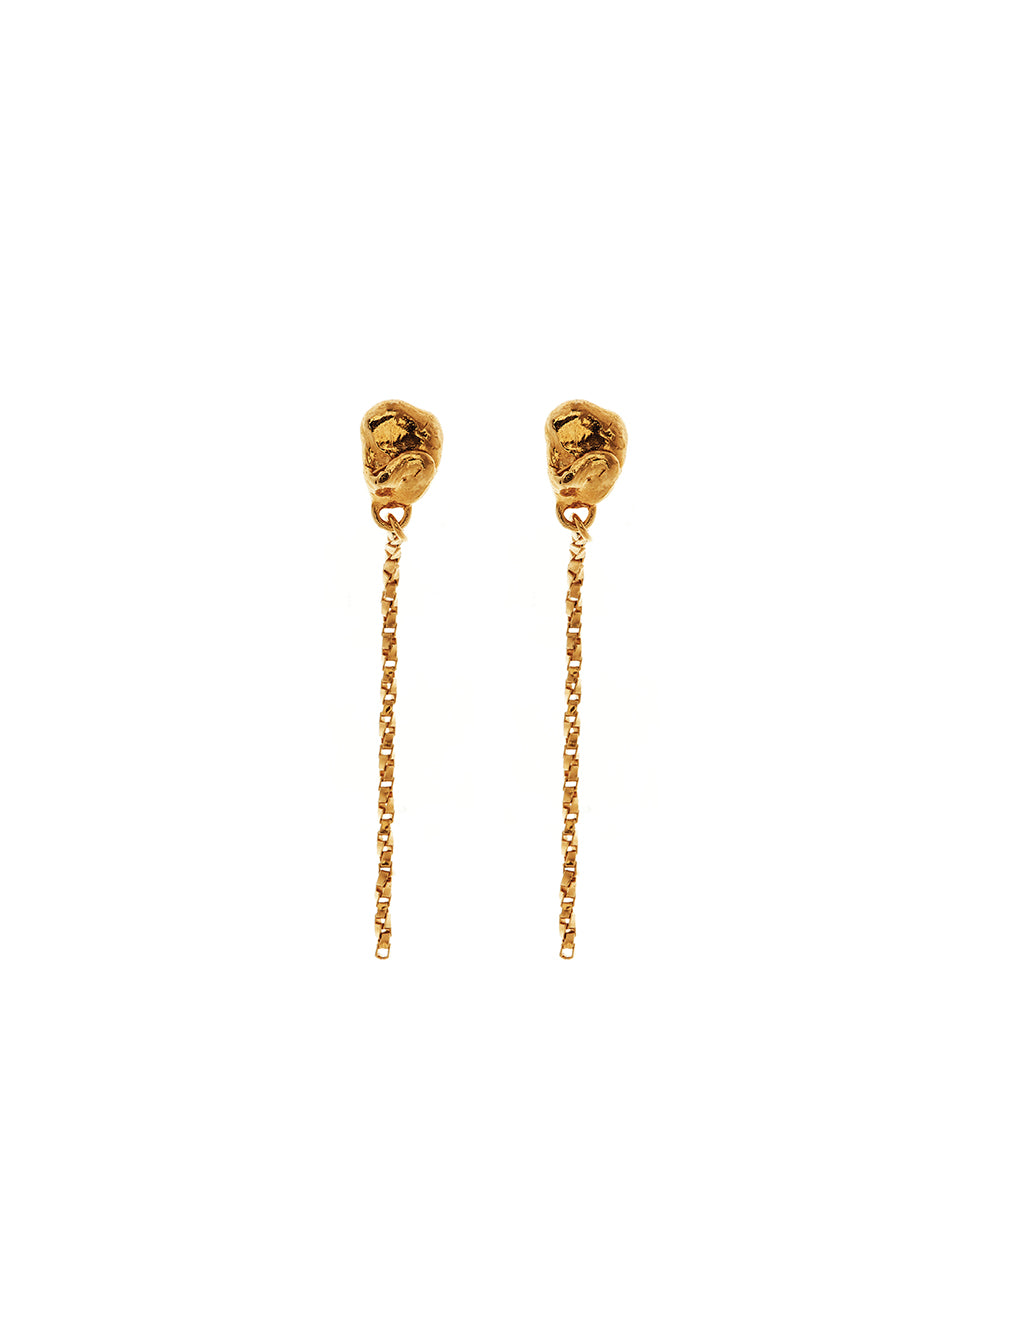 Gold vermeil drop earrings